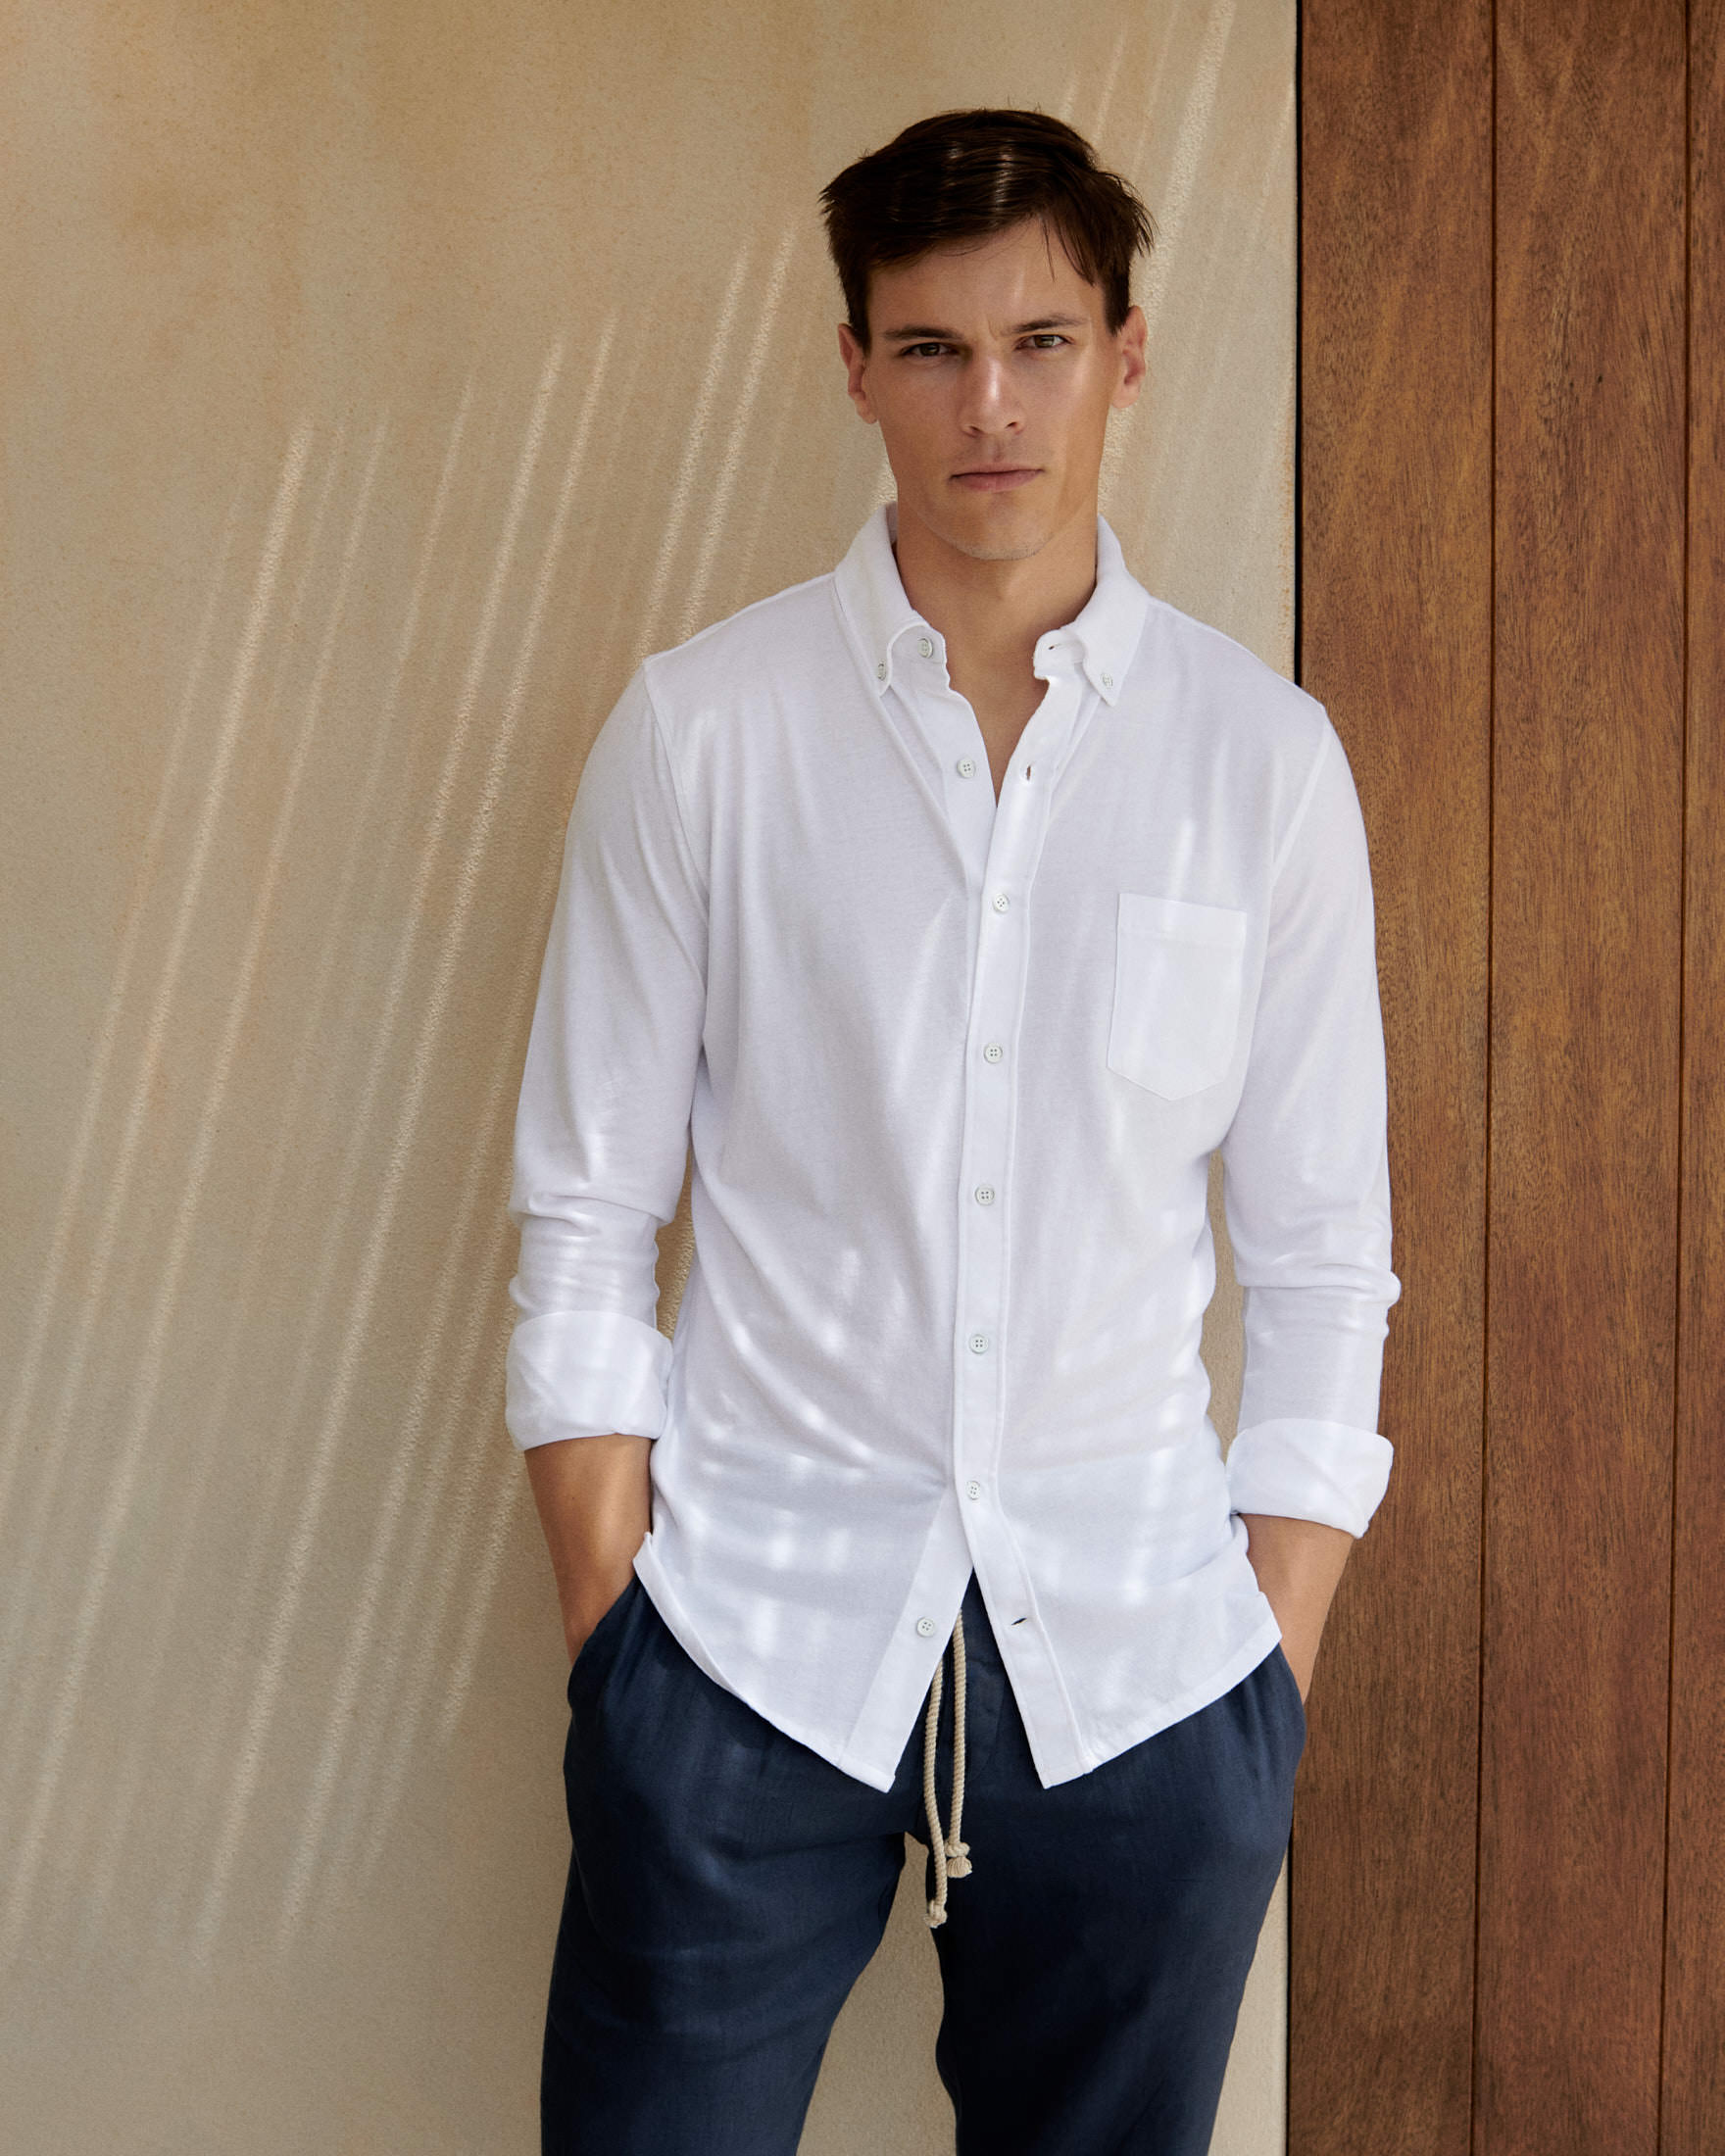 Organic Cotton Pedro Shirt - Long Sleeves - White